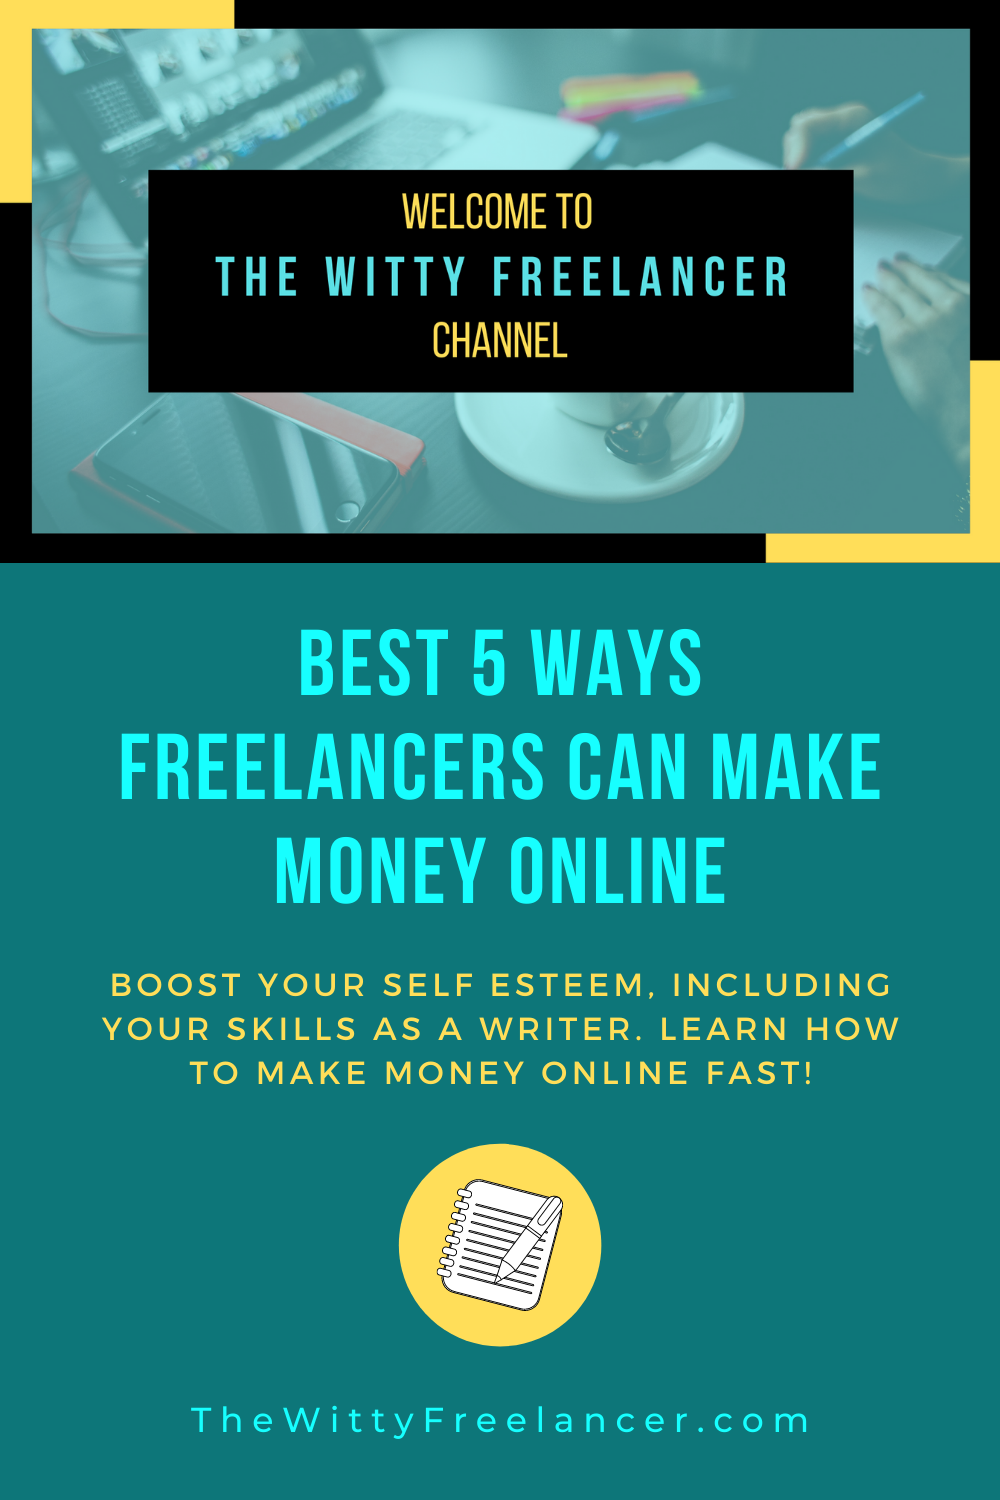 Best 5 Ways Freelancer and Bloggers Can Make Money Online